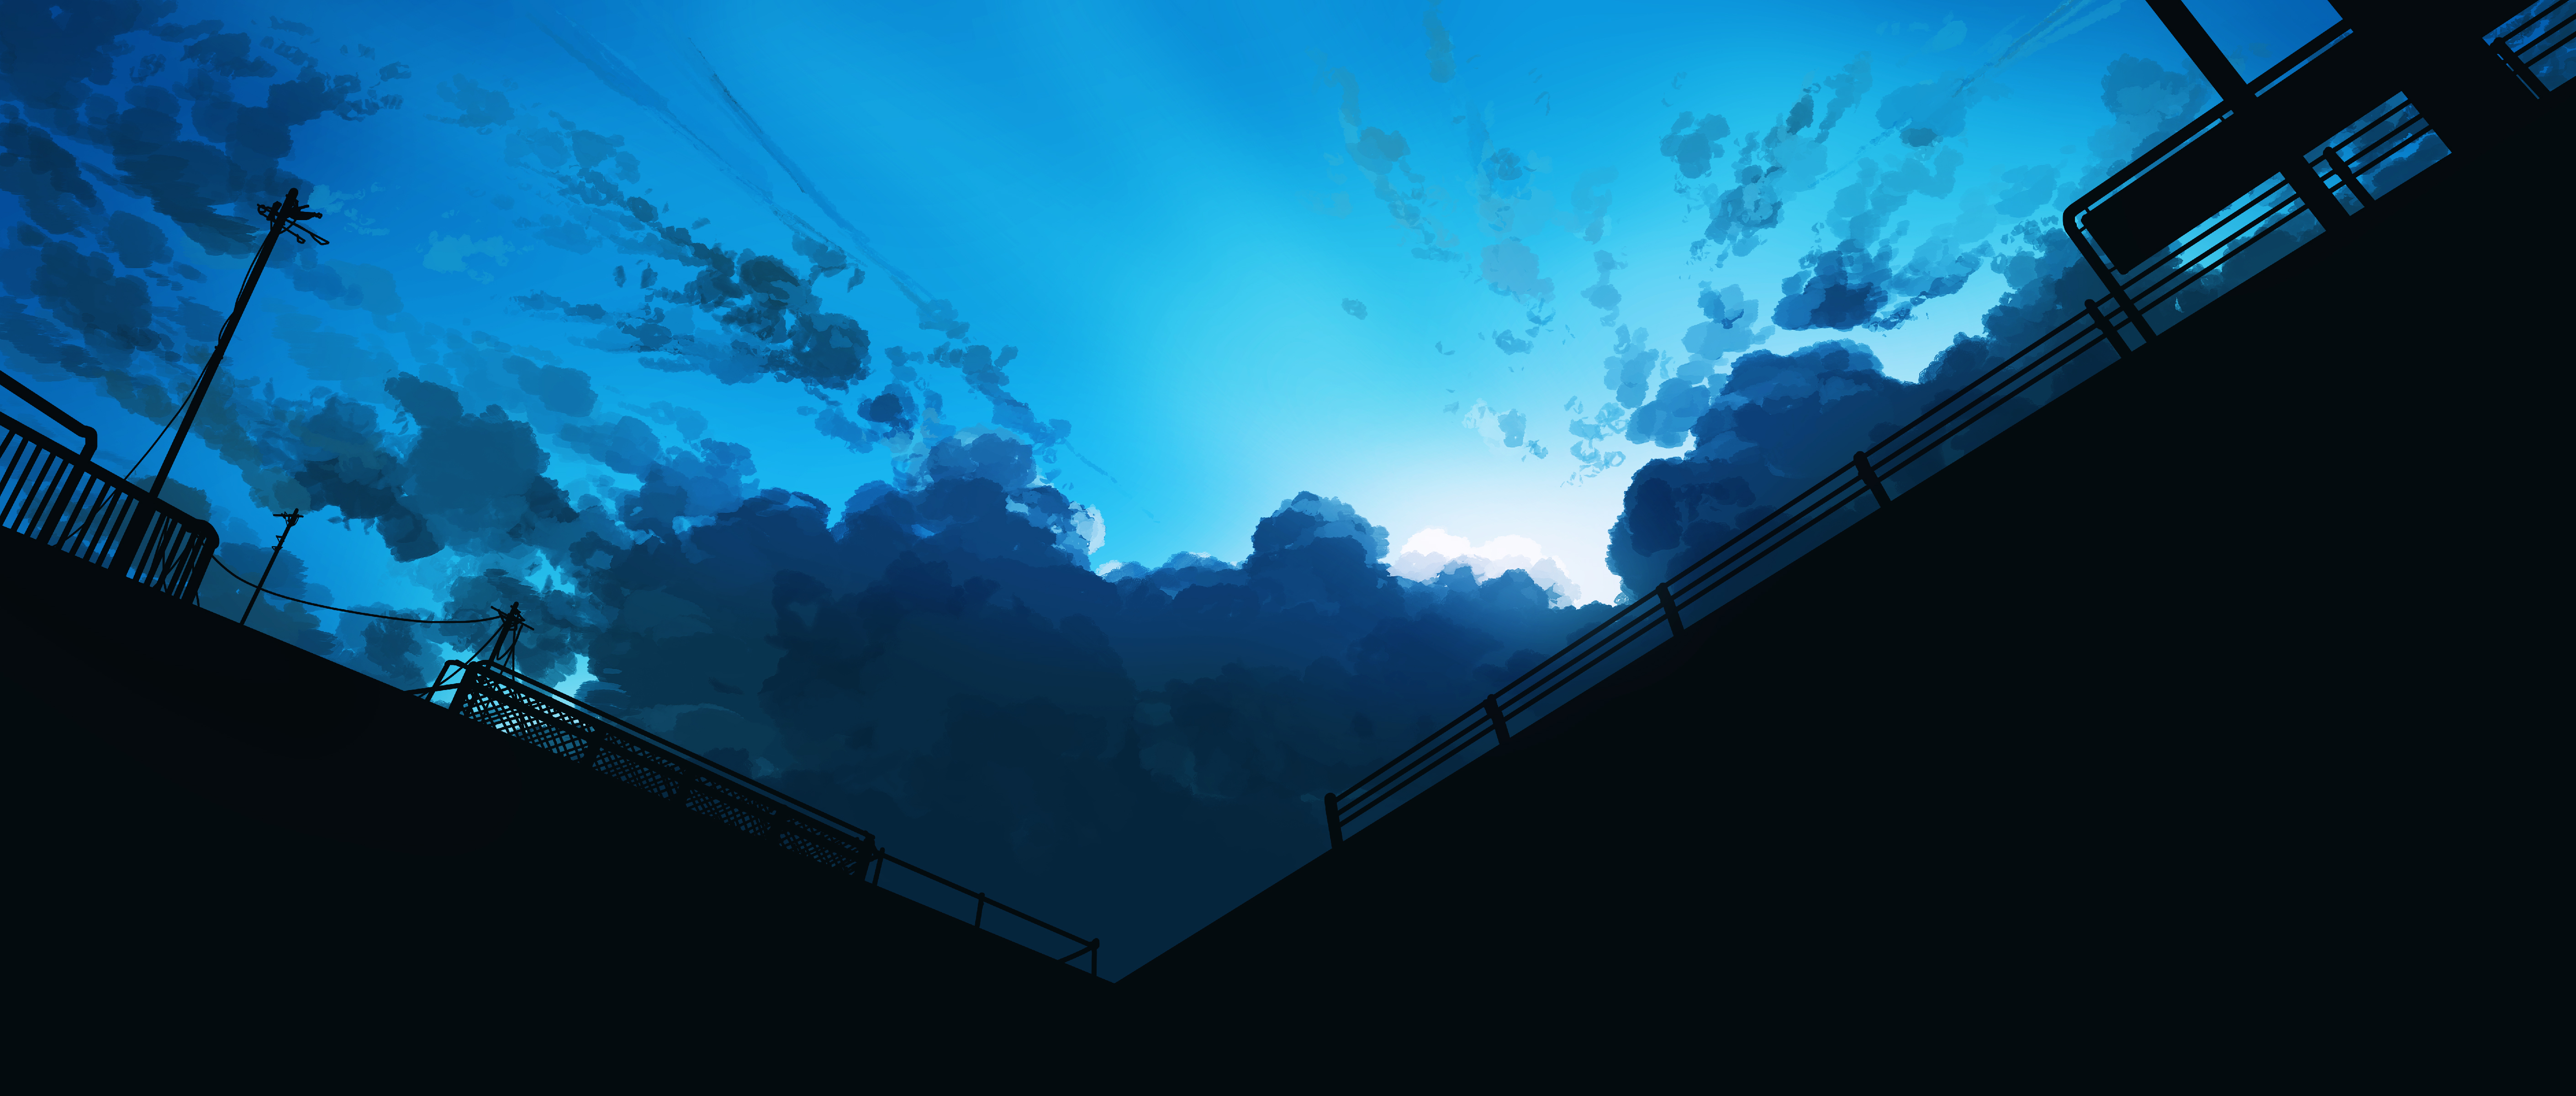 Anime Anime Sky Artwork Horizon Clouds Sky Silhouette Gracile Rooftops 5640x2400